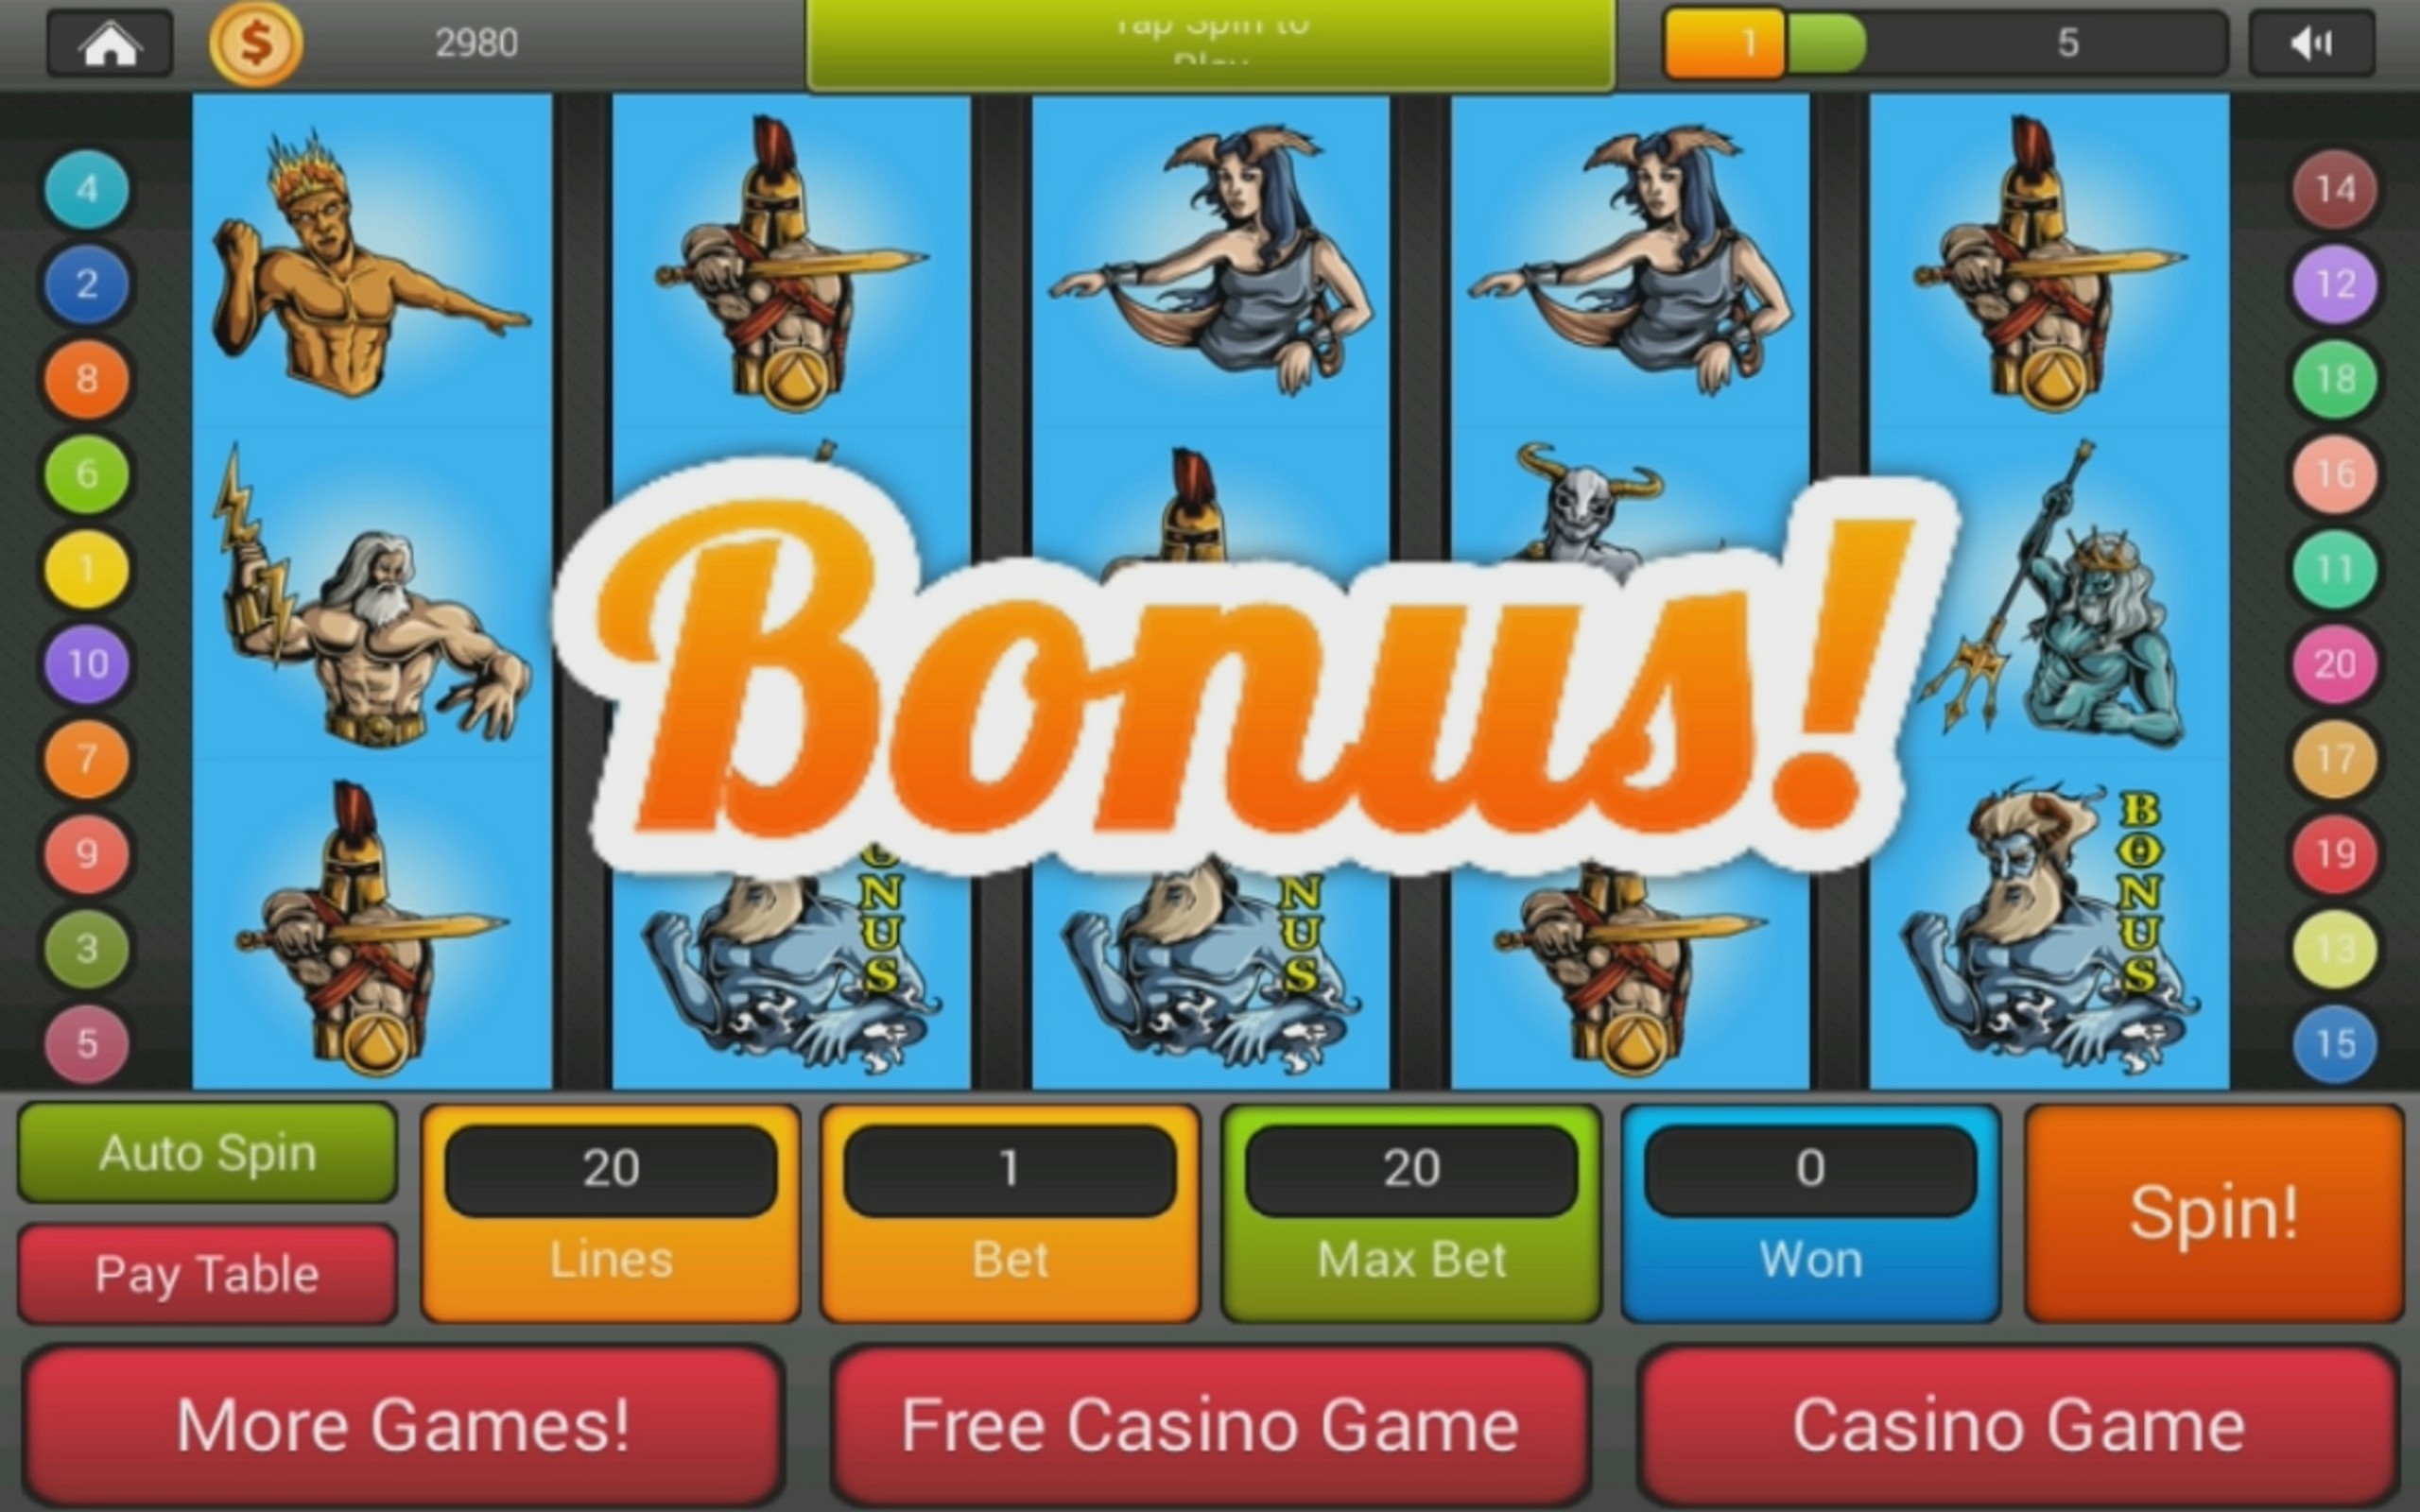 Juegos Jetbingo com slots vegas casino free coins 46726